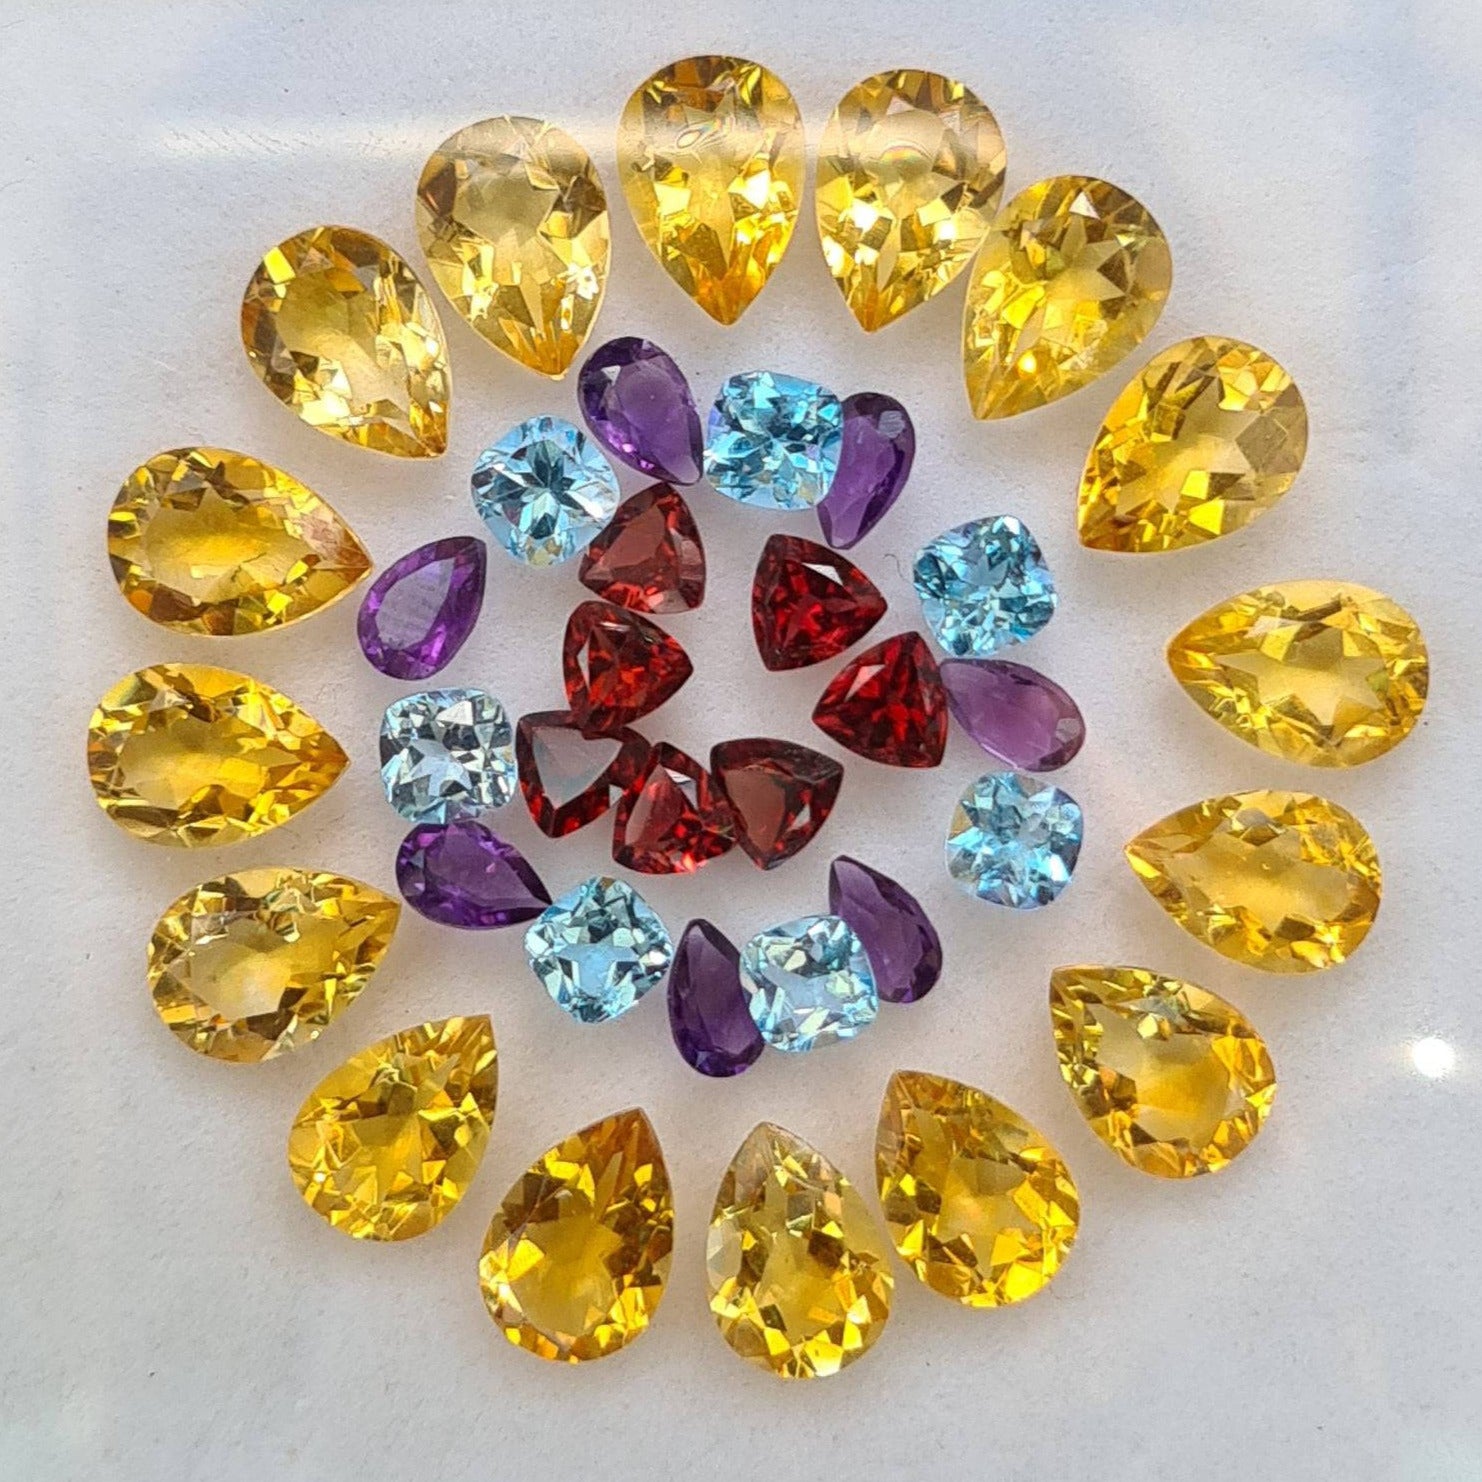 37 Pcs Natural Mix Faceted Gemstones Mix Shape,5-10mm  Gems Lot -Loose Gemstones - The LabradoriteKing